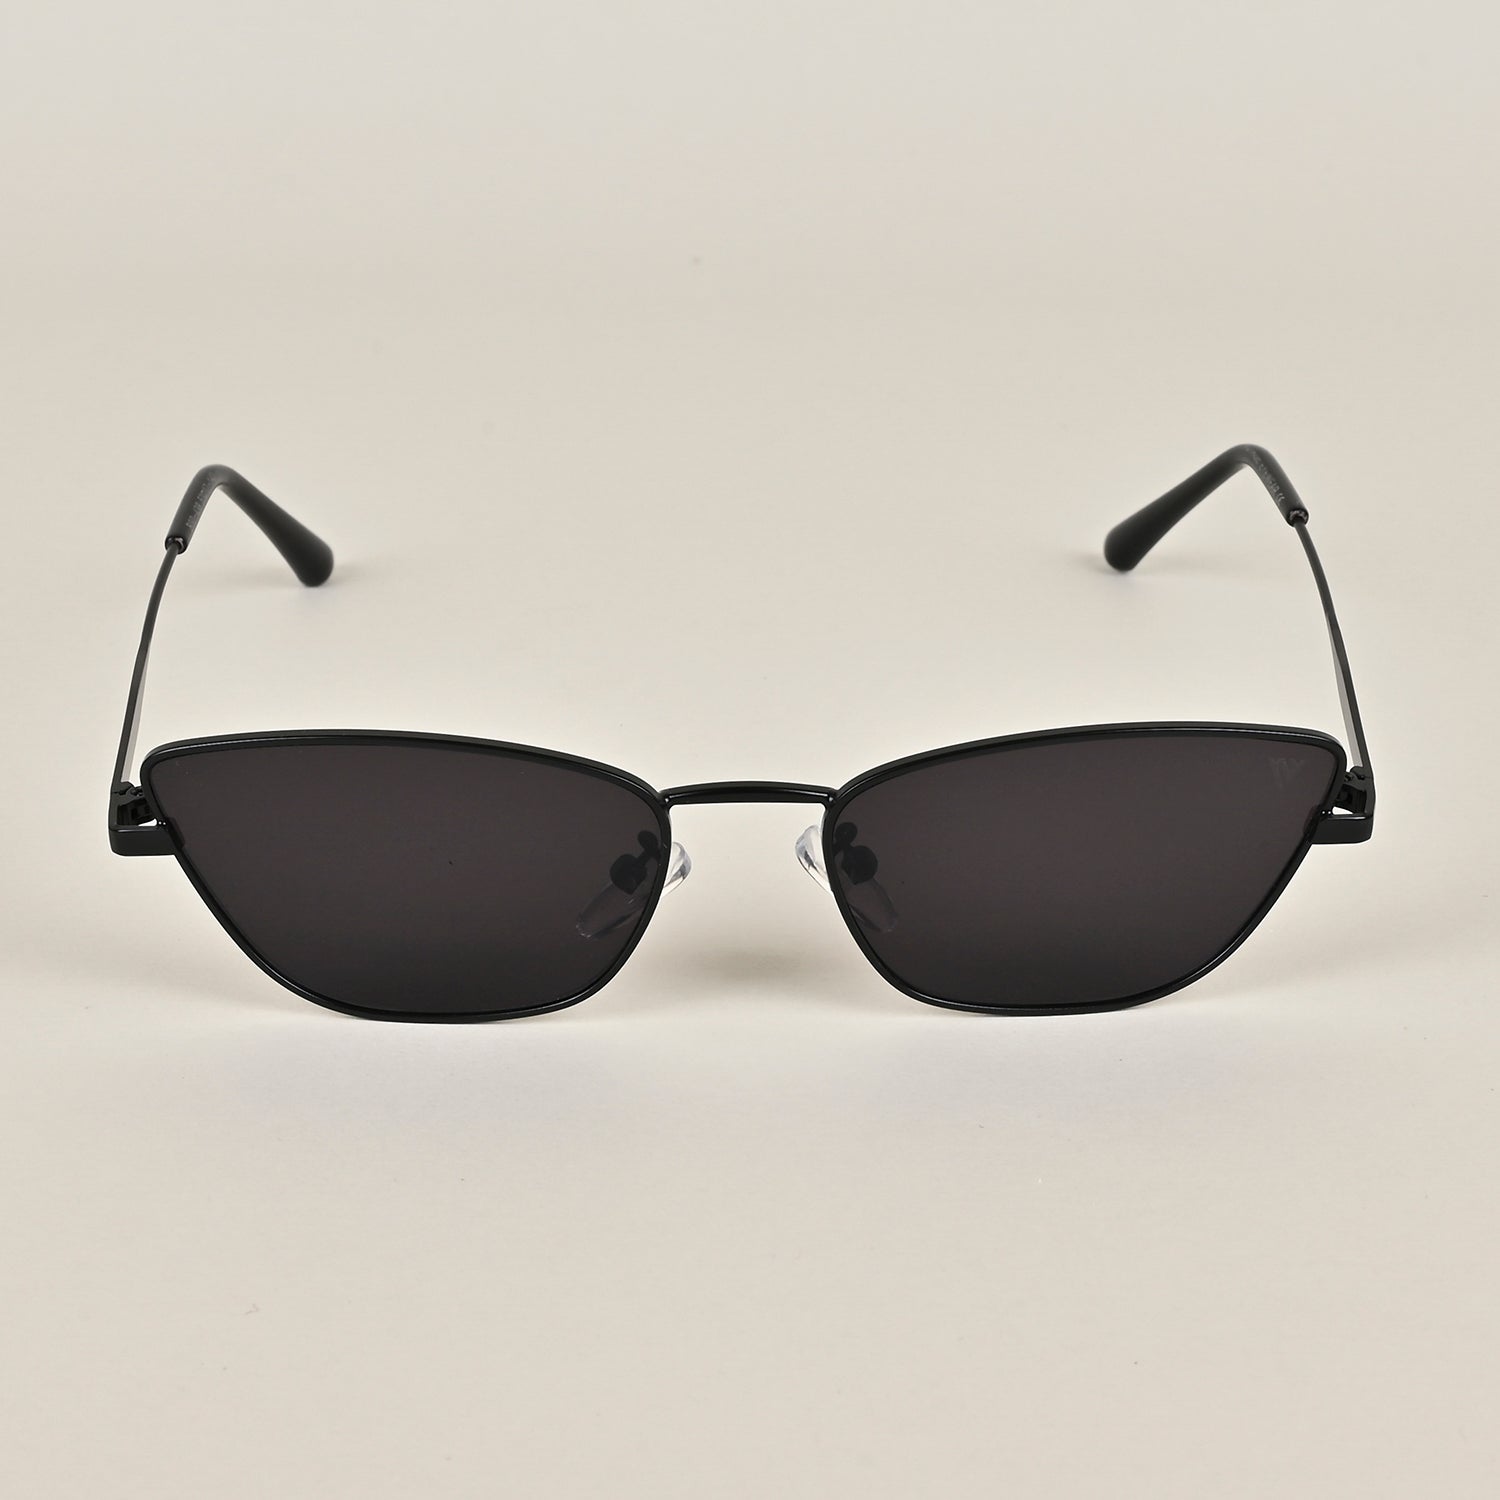 Voyage Black Cateye Sunglasses MG3446